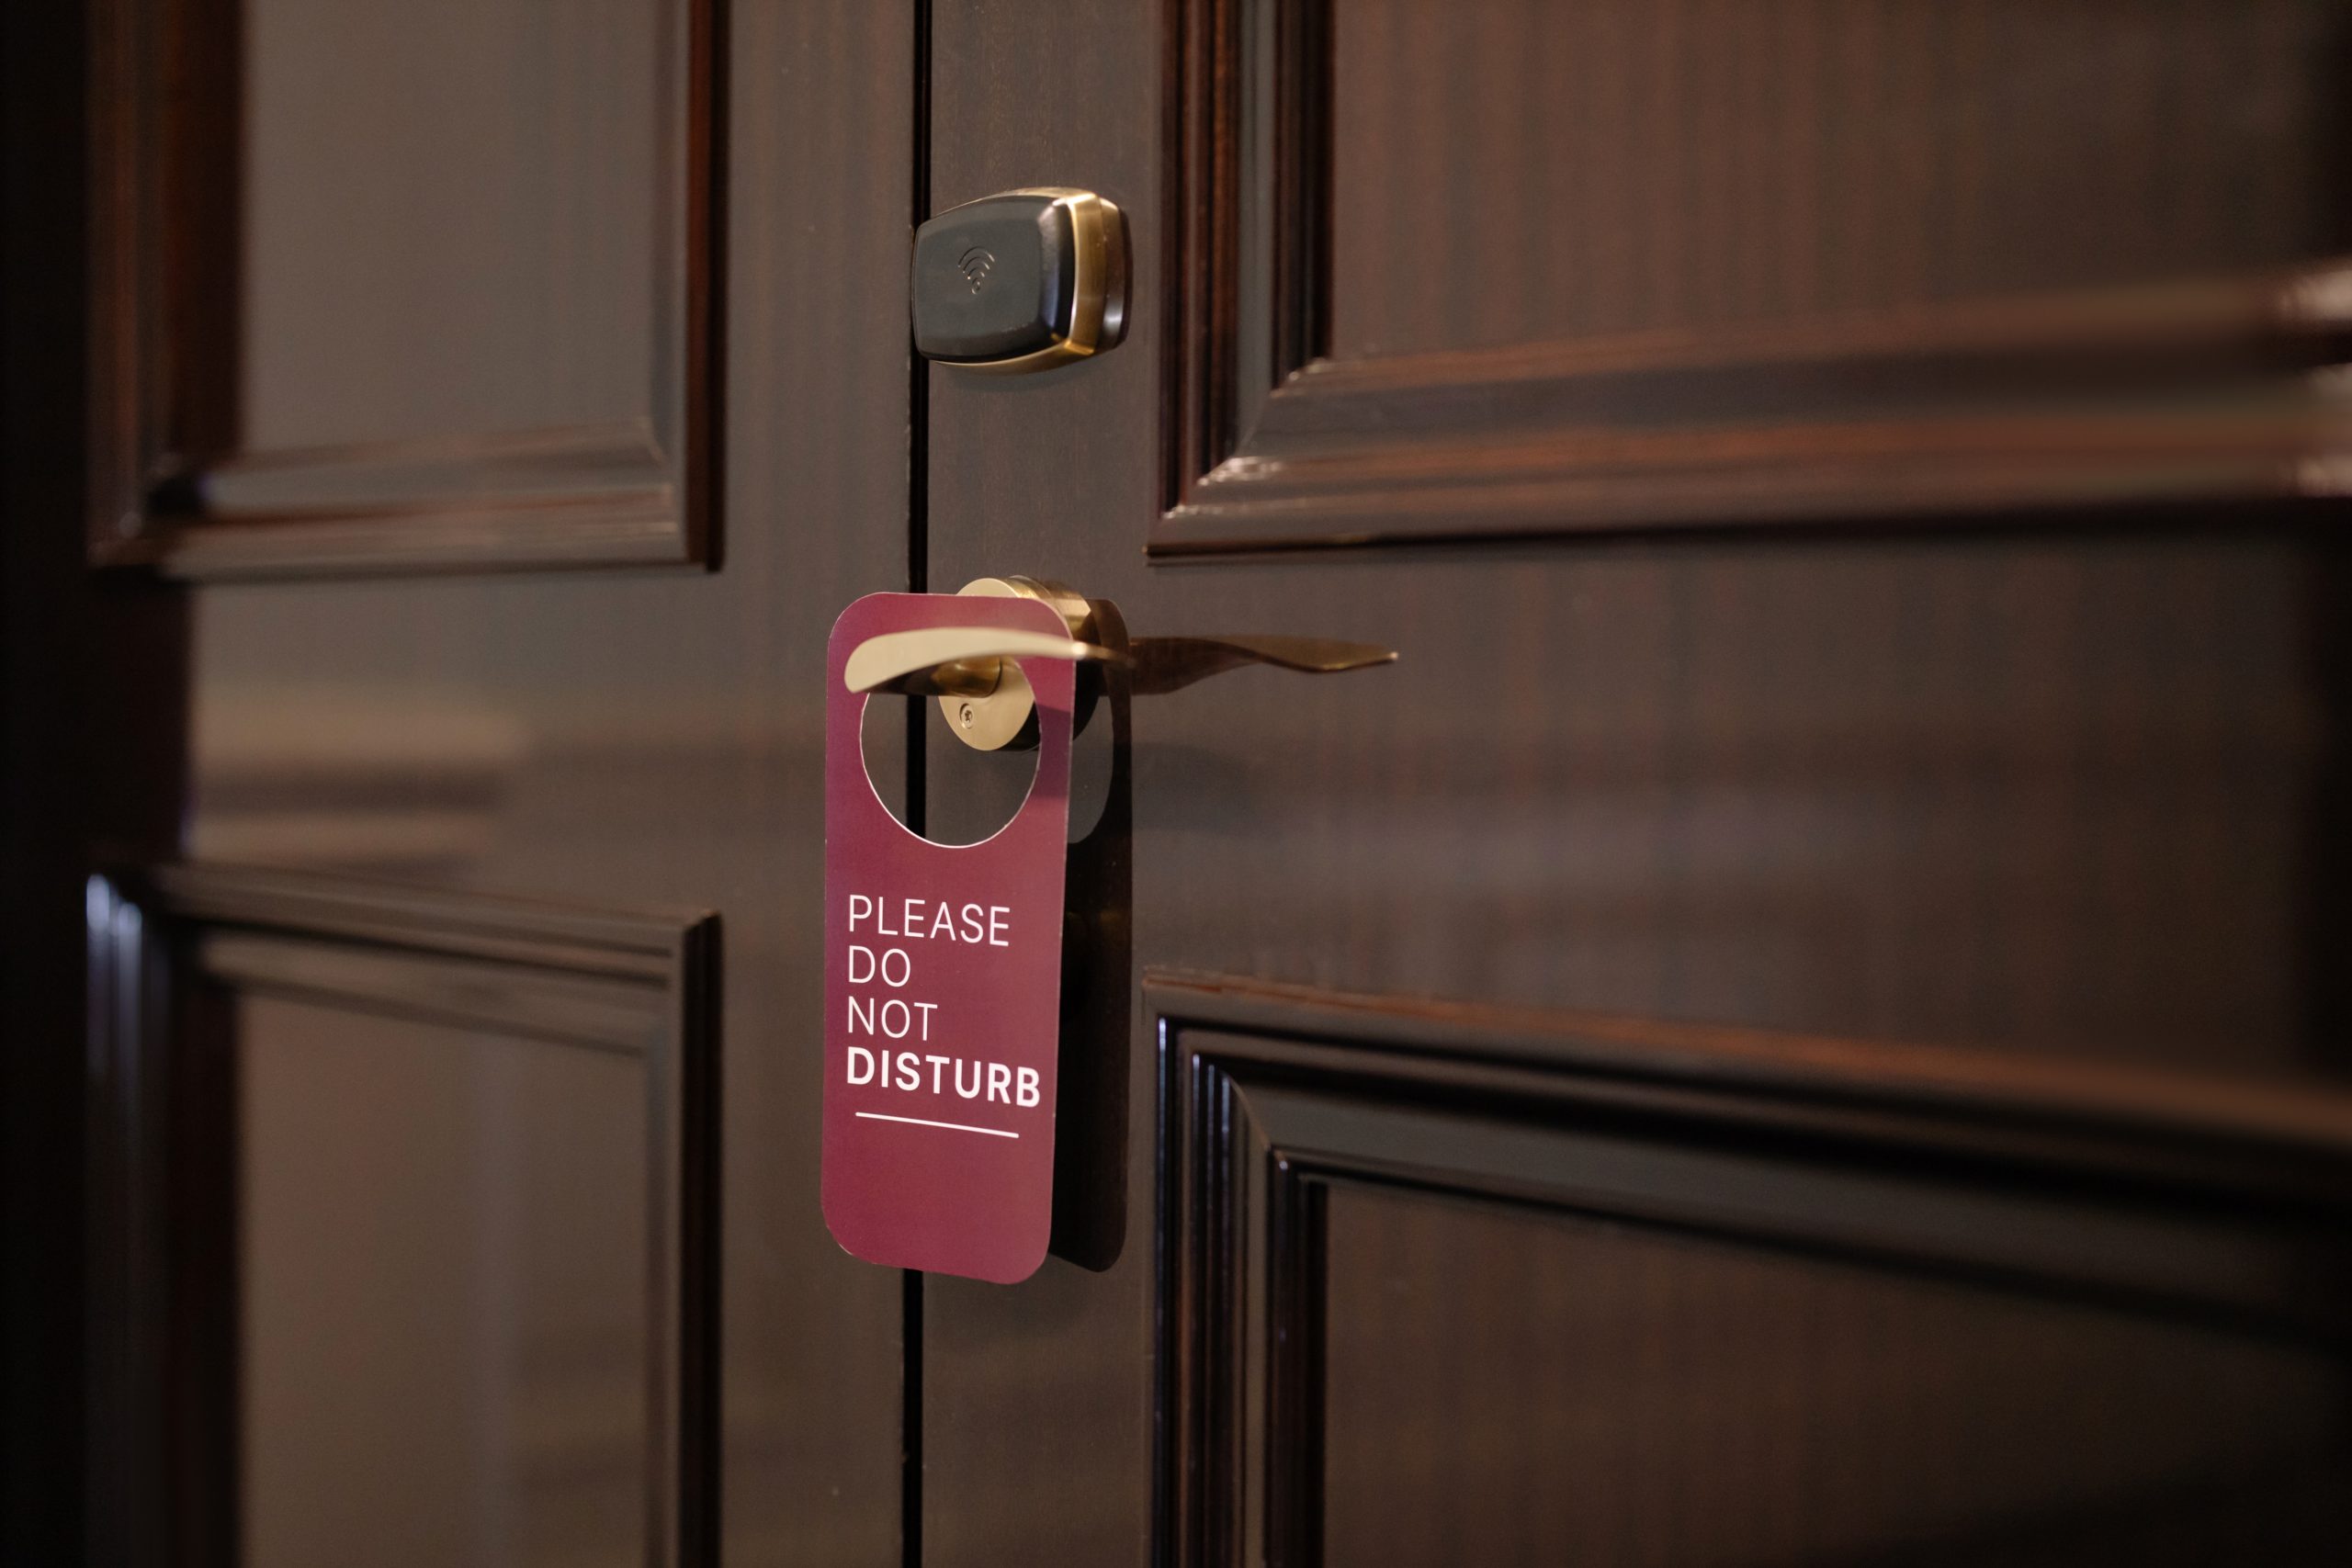 burgundy colored "Do Not Disturb" sign hanging on the handle of dark wooden doors.